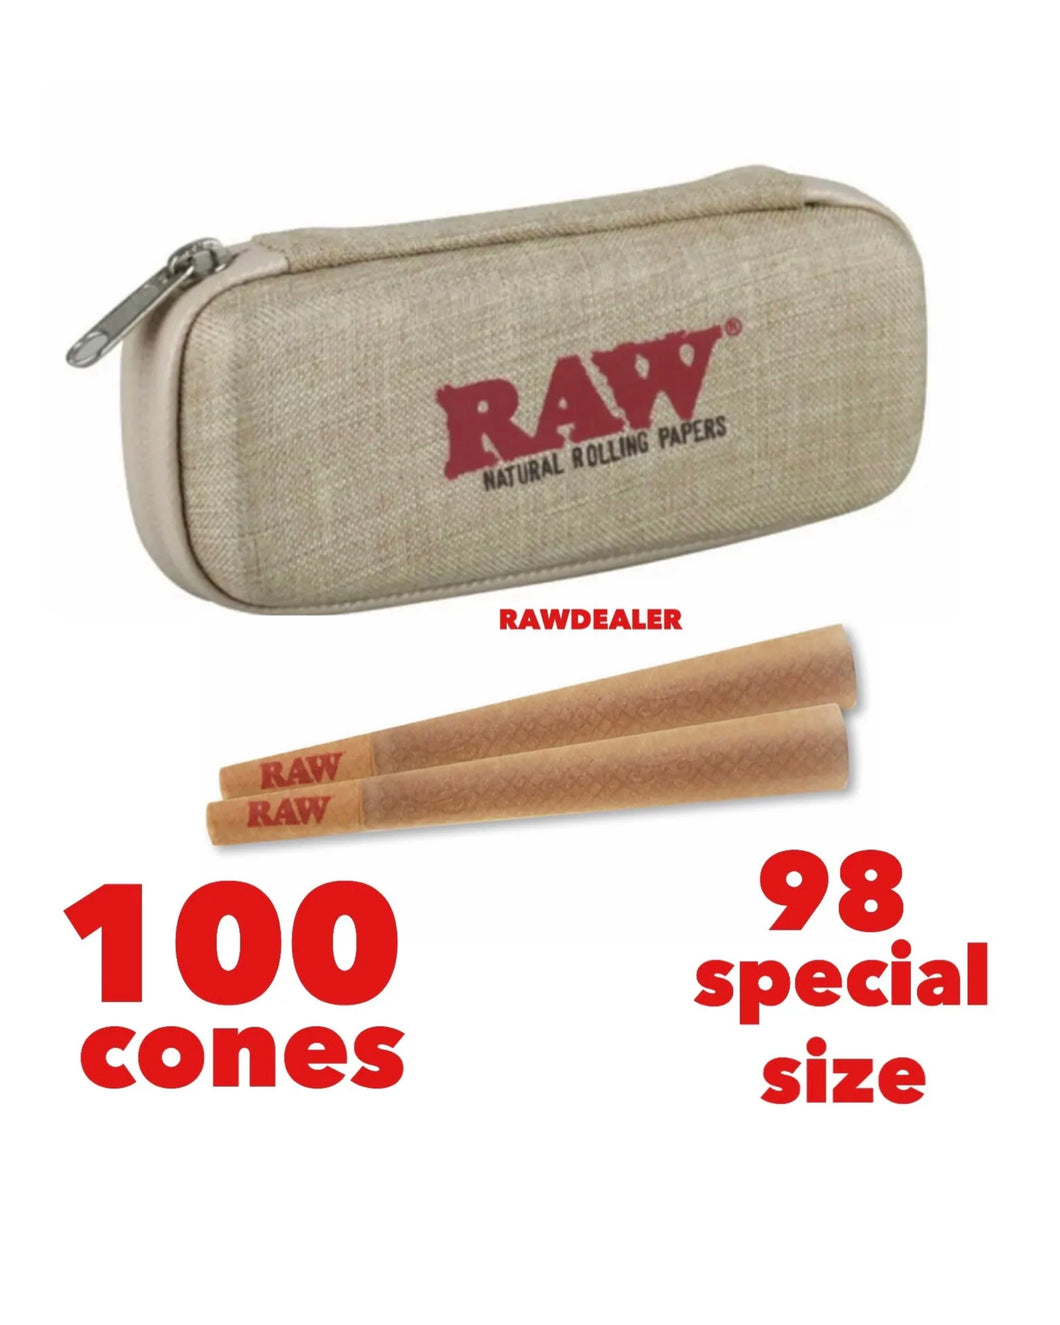 RAW 98 special Size Pre-Rolled Cones (100pk) + raw Cone Wallet